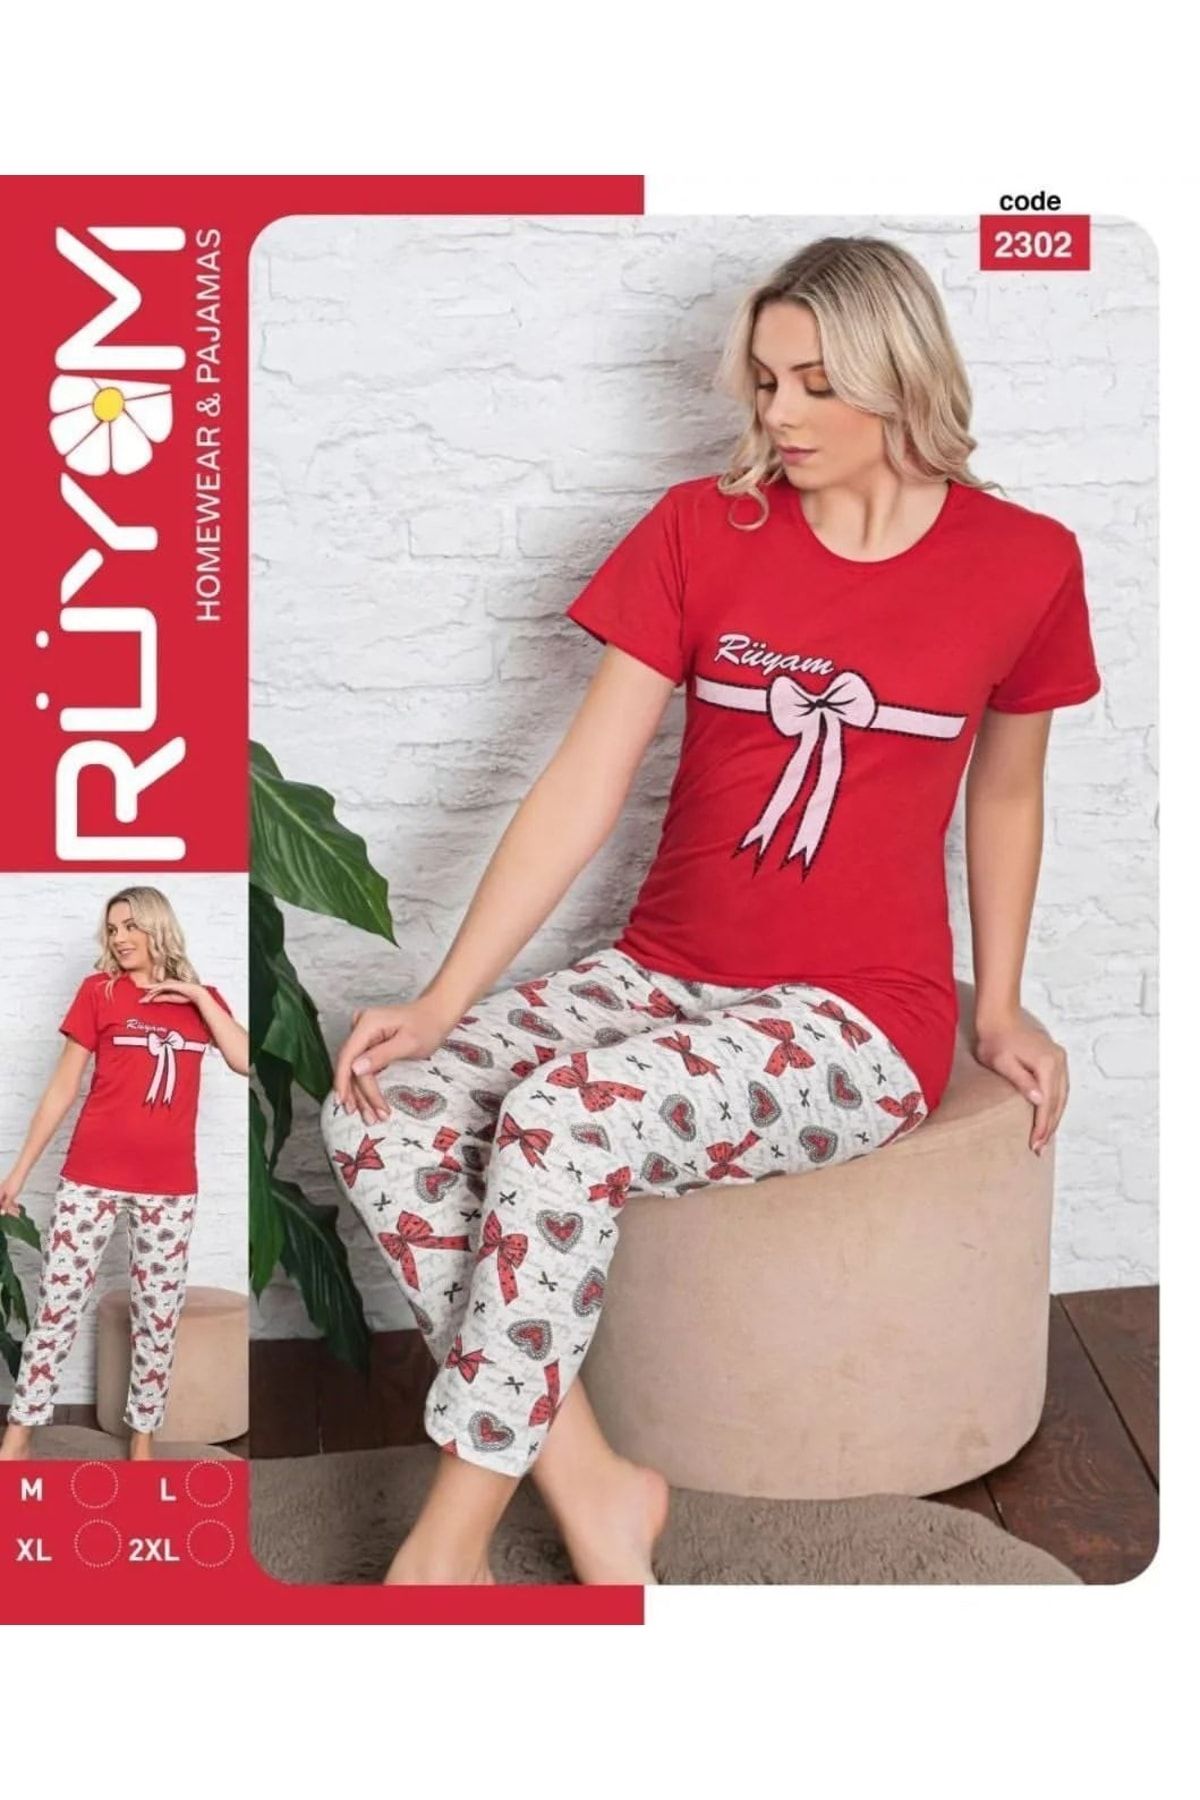 Rüyam Ks.kol Pijama Takımı 2302